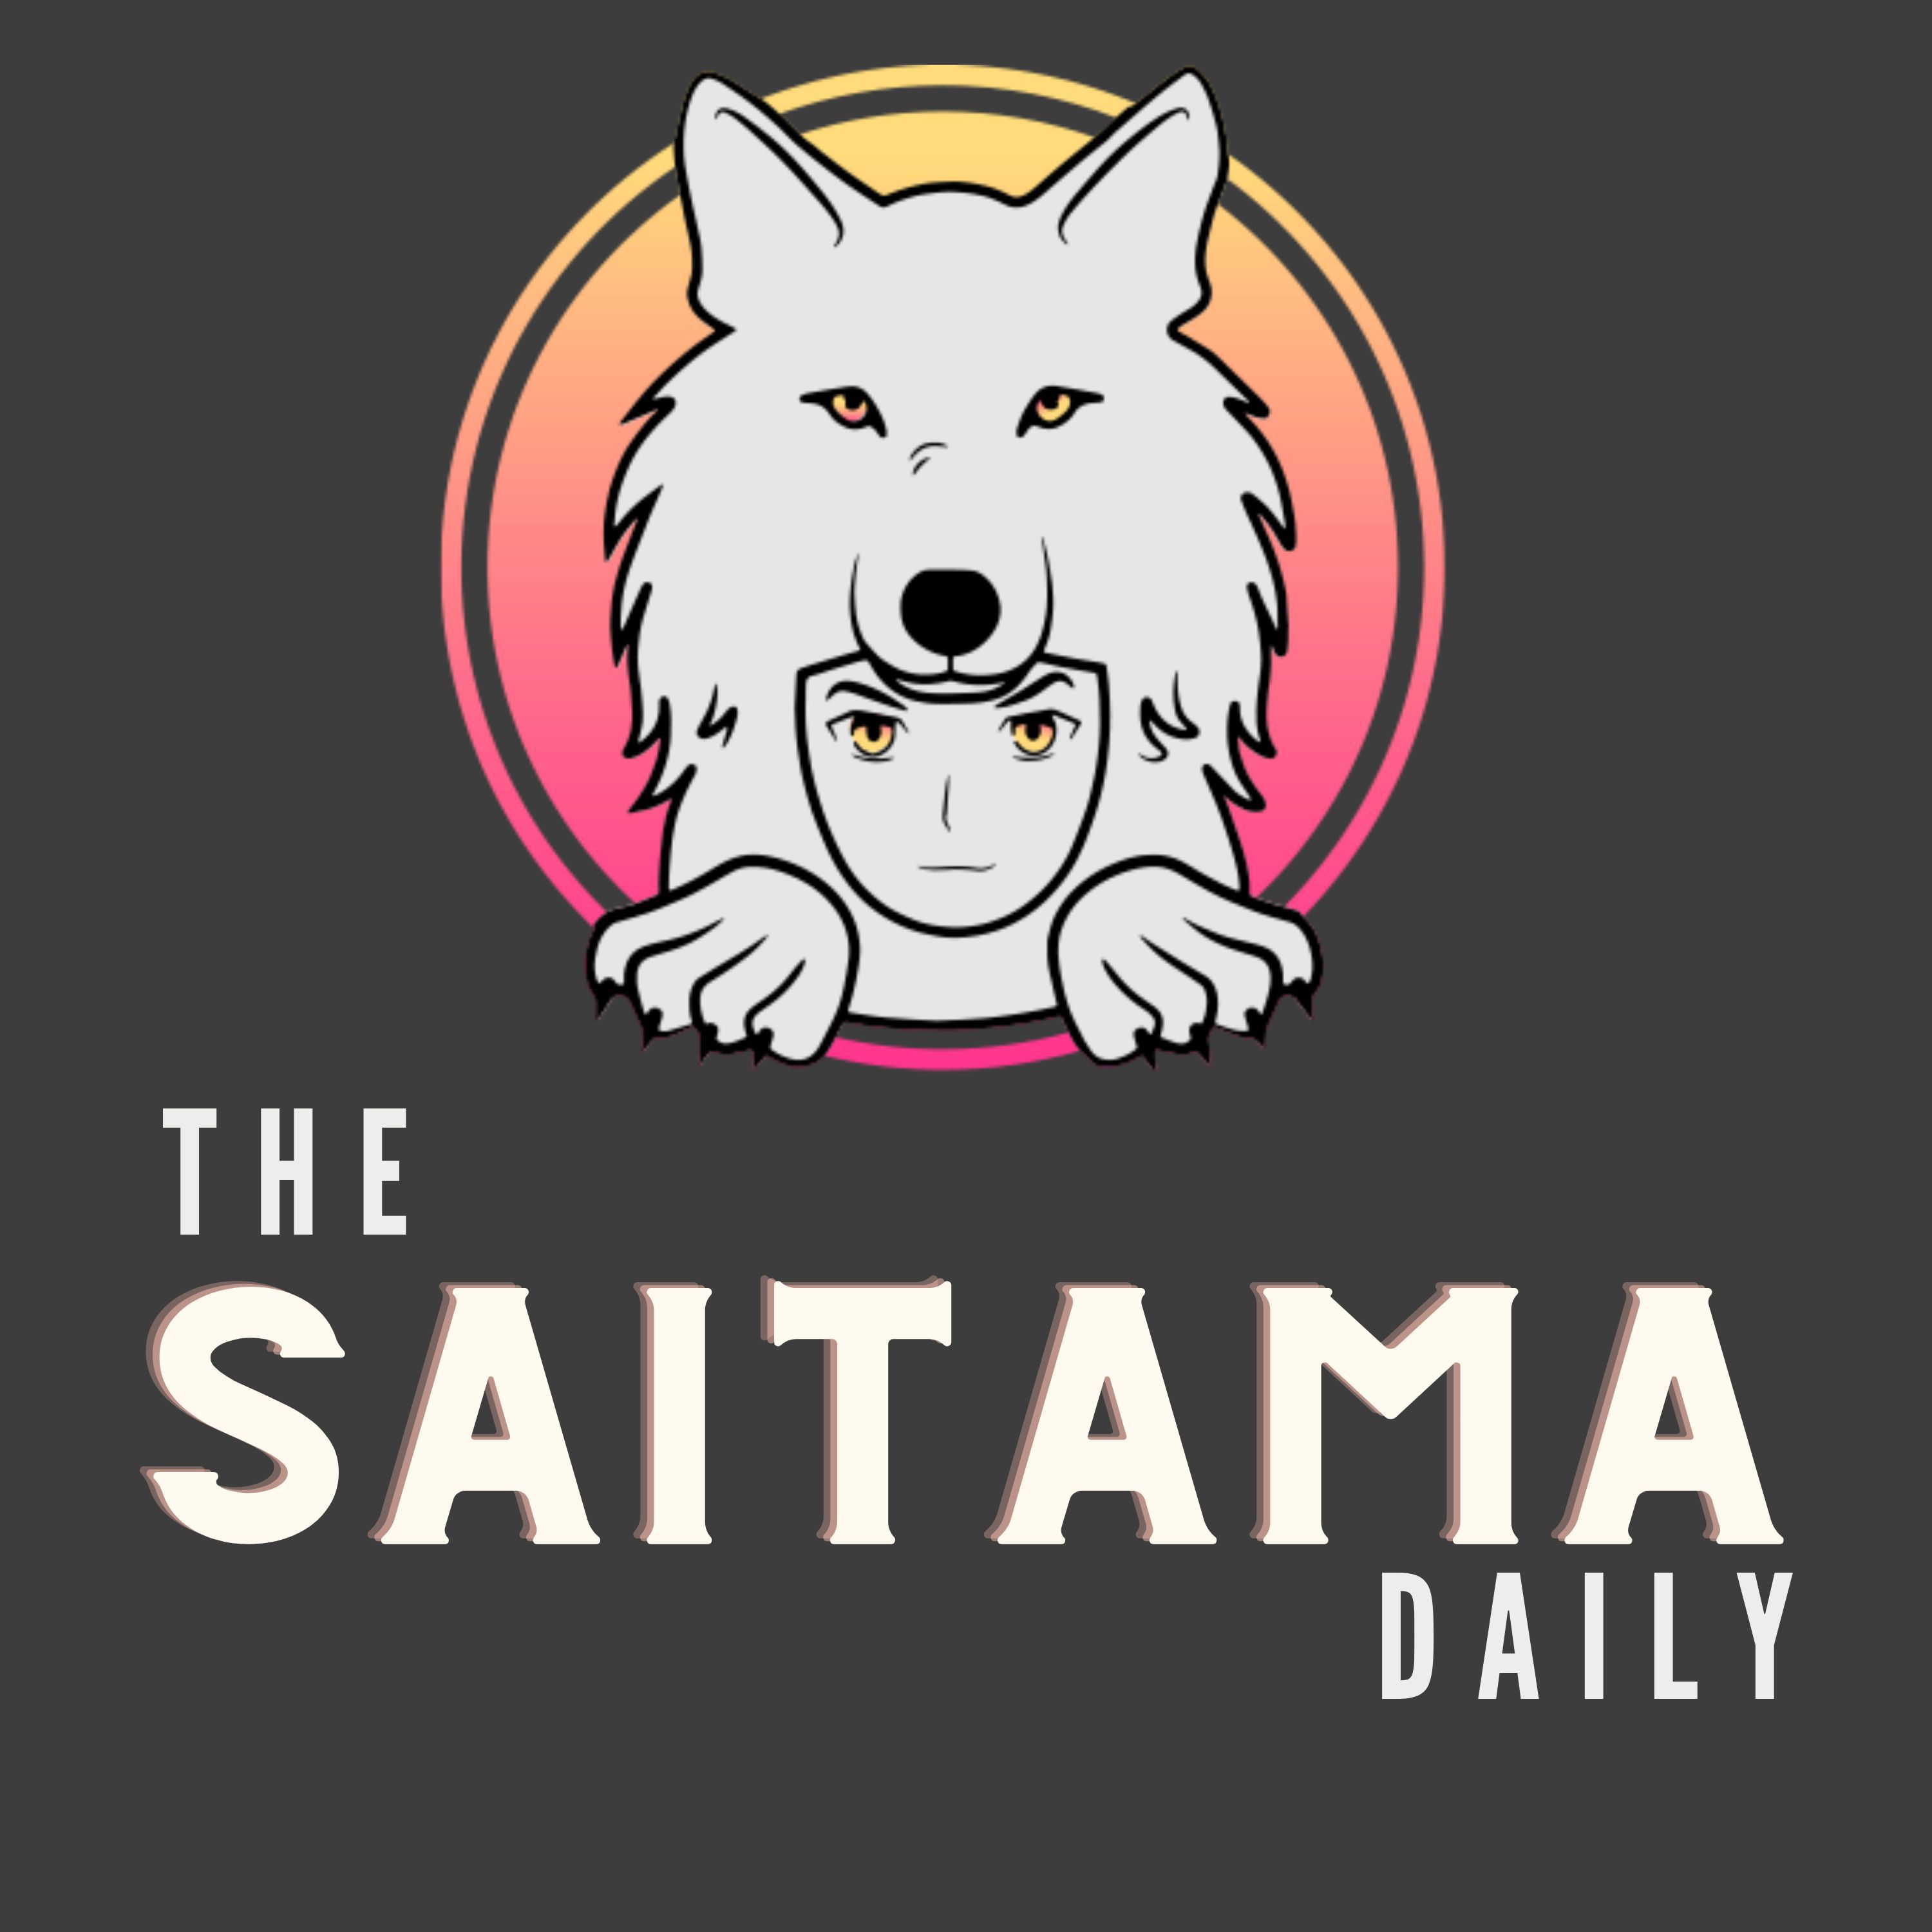 The Saitama Daily